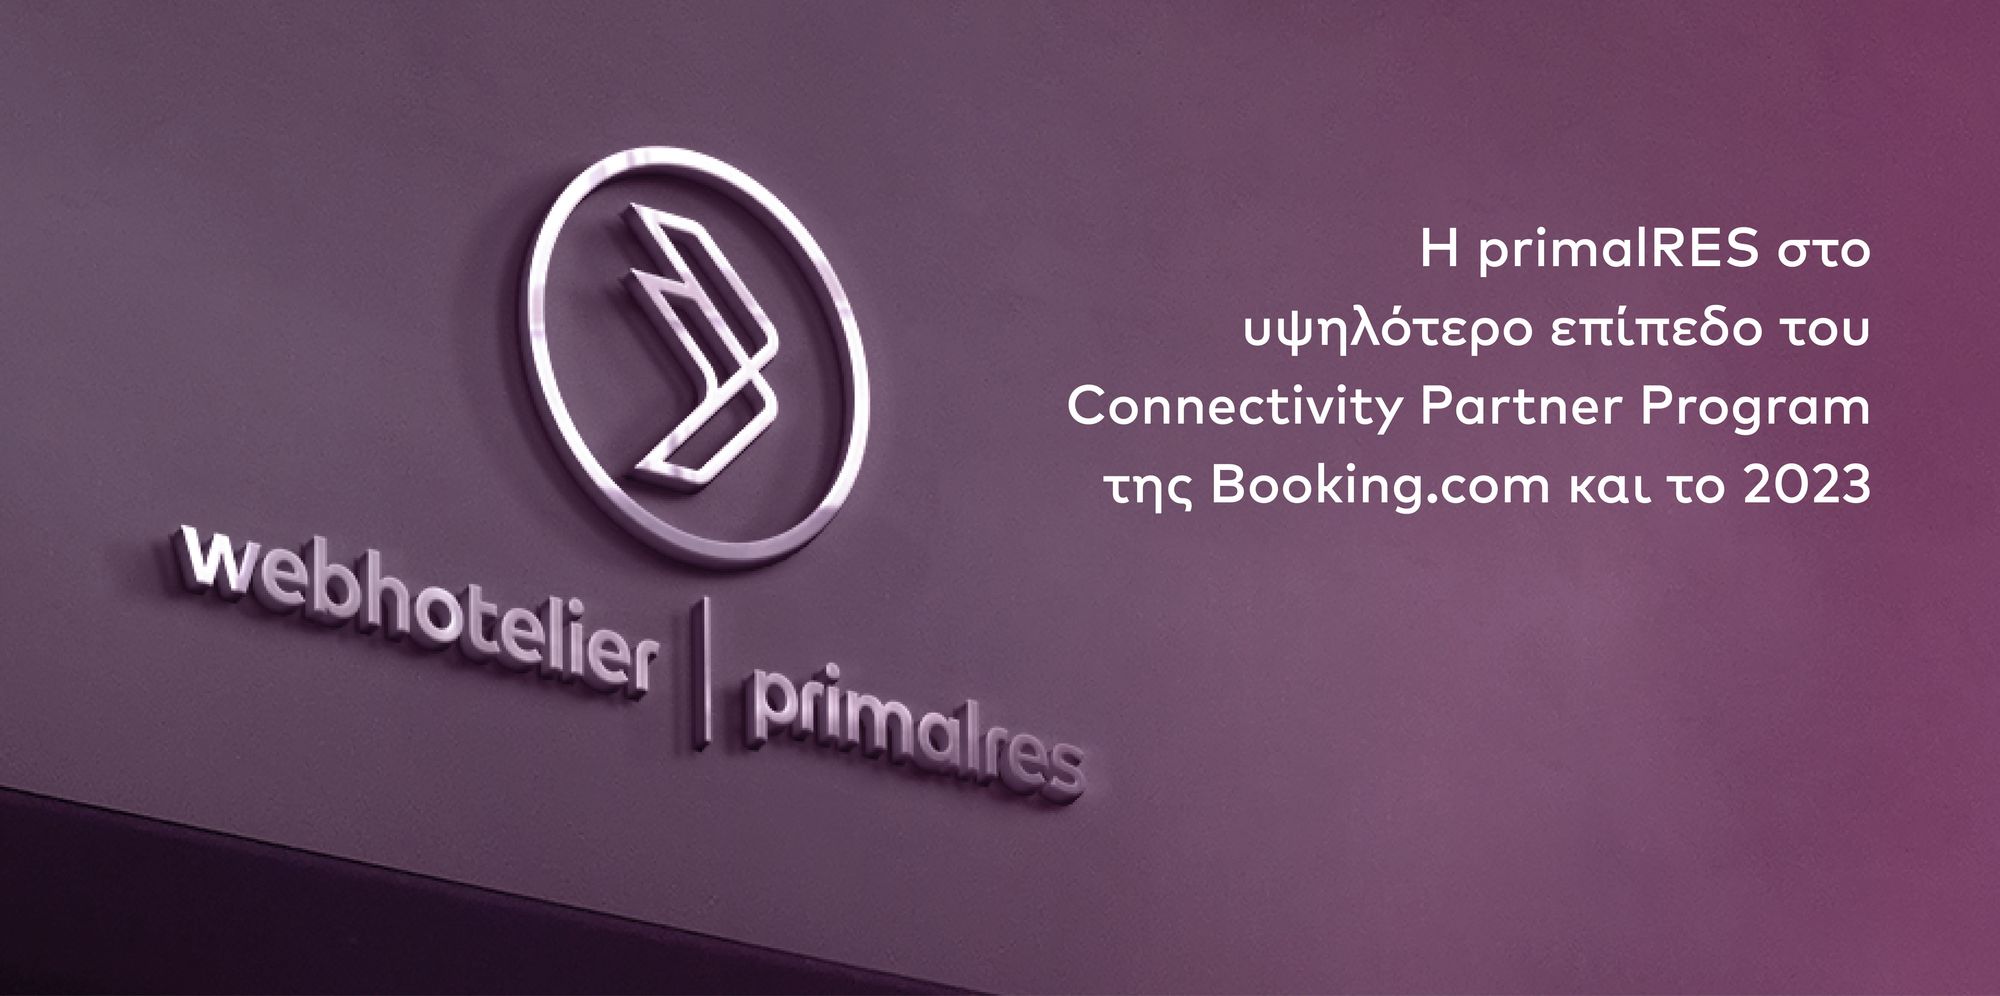 H primalRES στο υψηλότερο επίπεδο του Connectivity Partner Program της Booking.com και το 2023